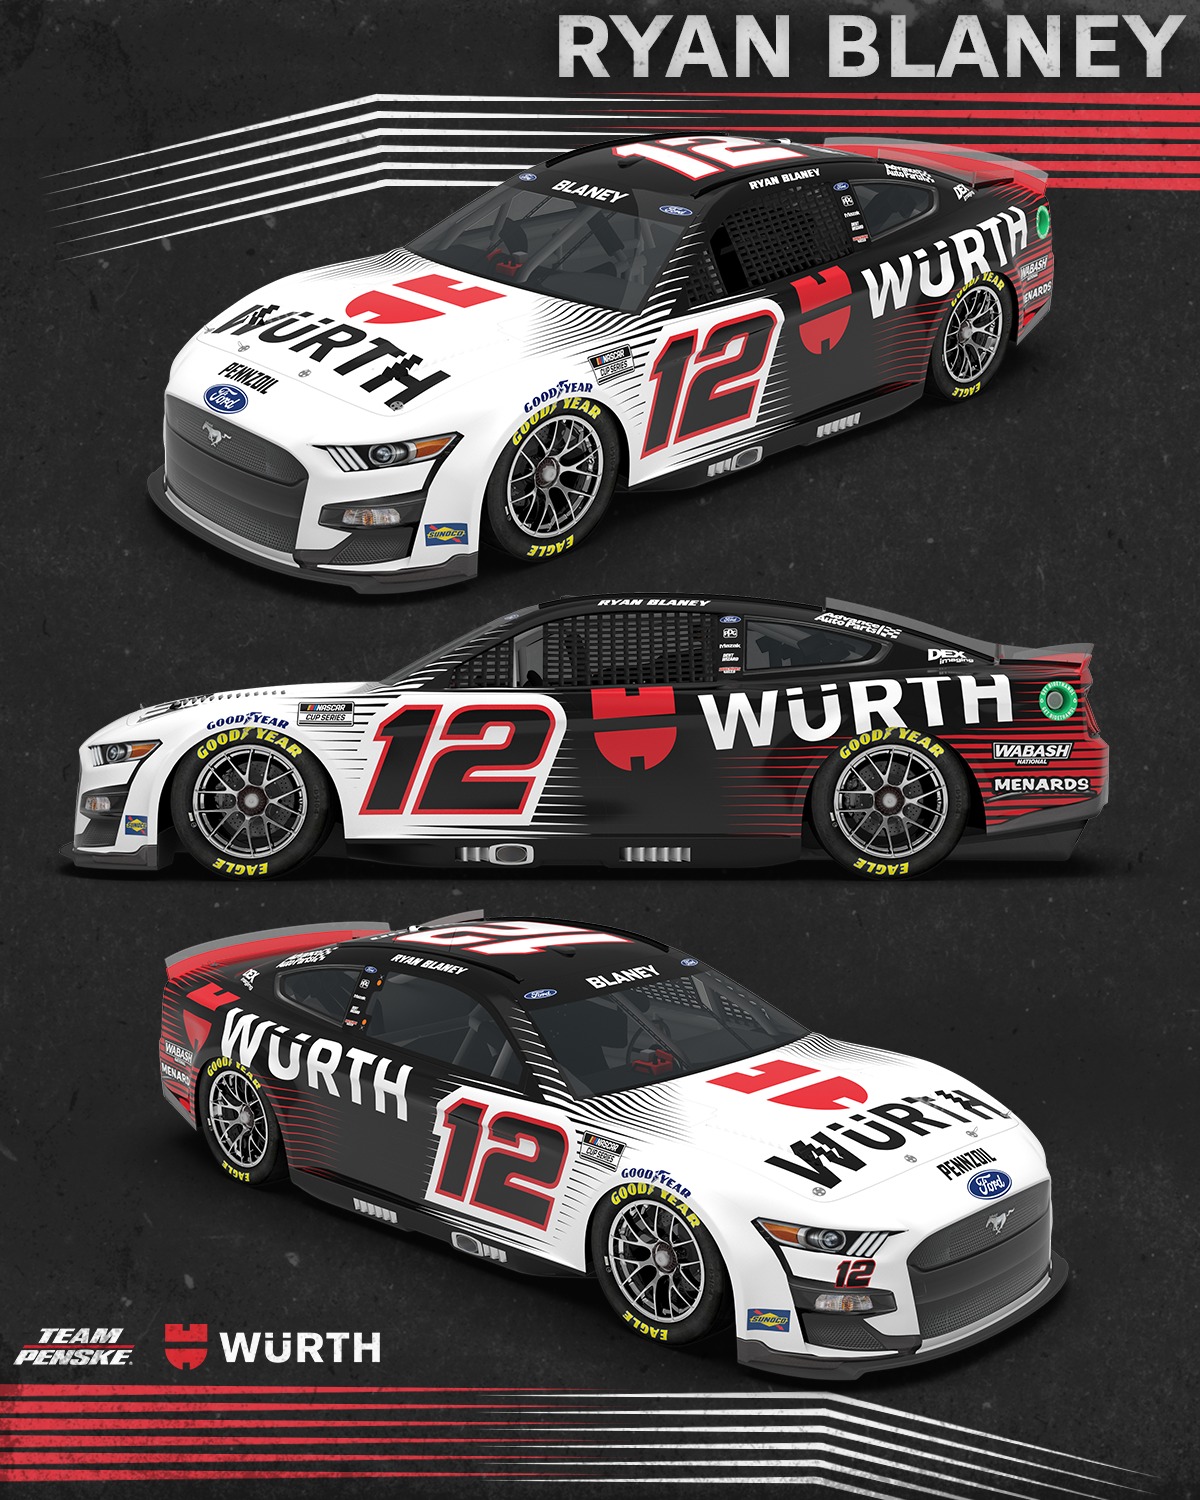 Wurth Racing